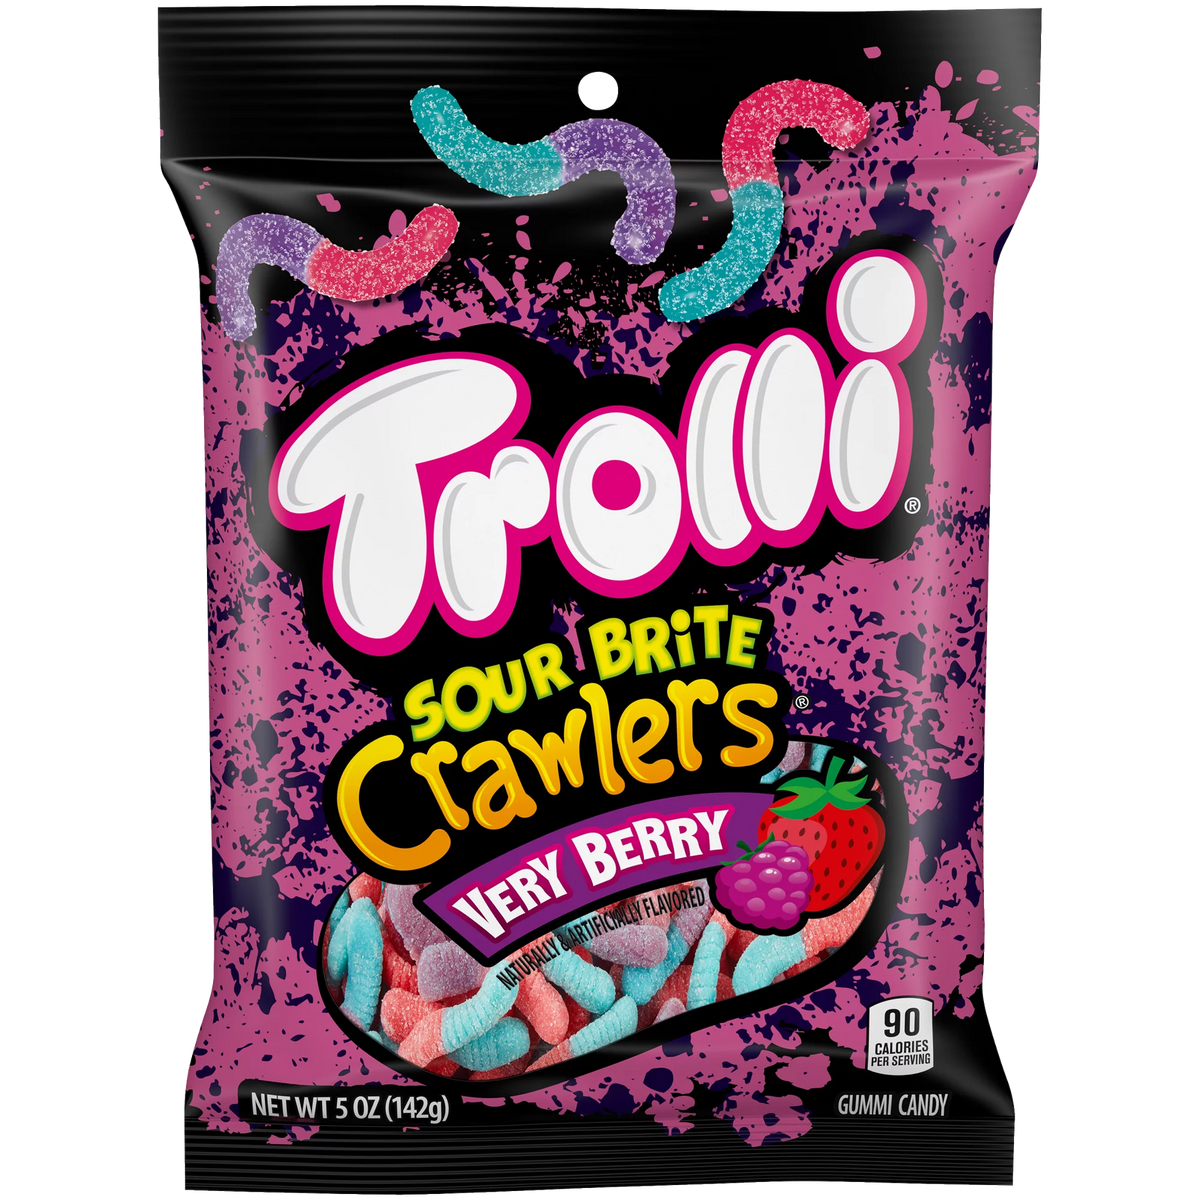 Trolli Sour Brite Crawlers Very Berry Gummi Candy 5 oz Bag